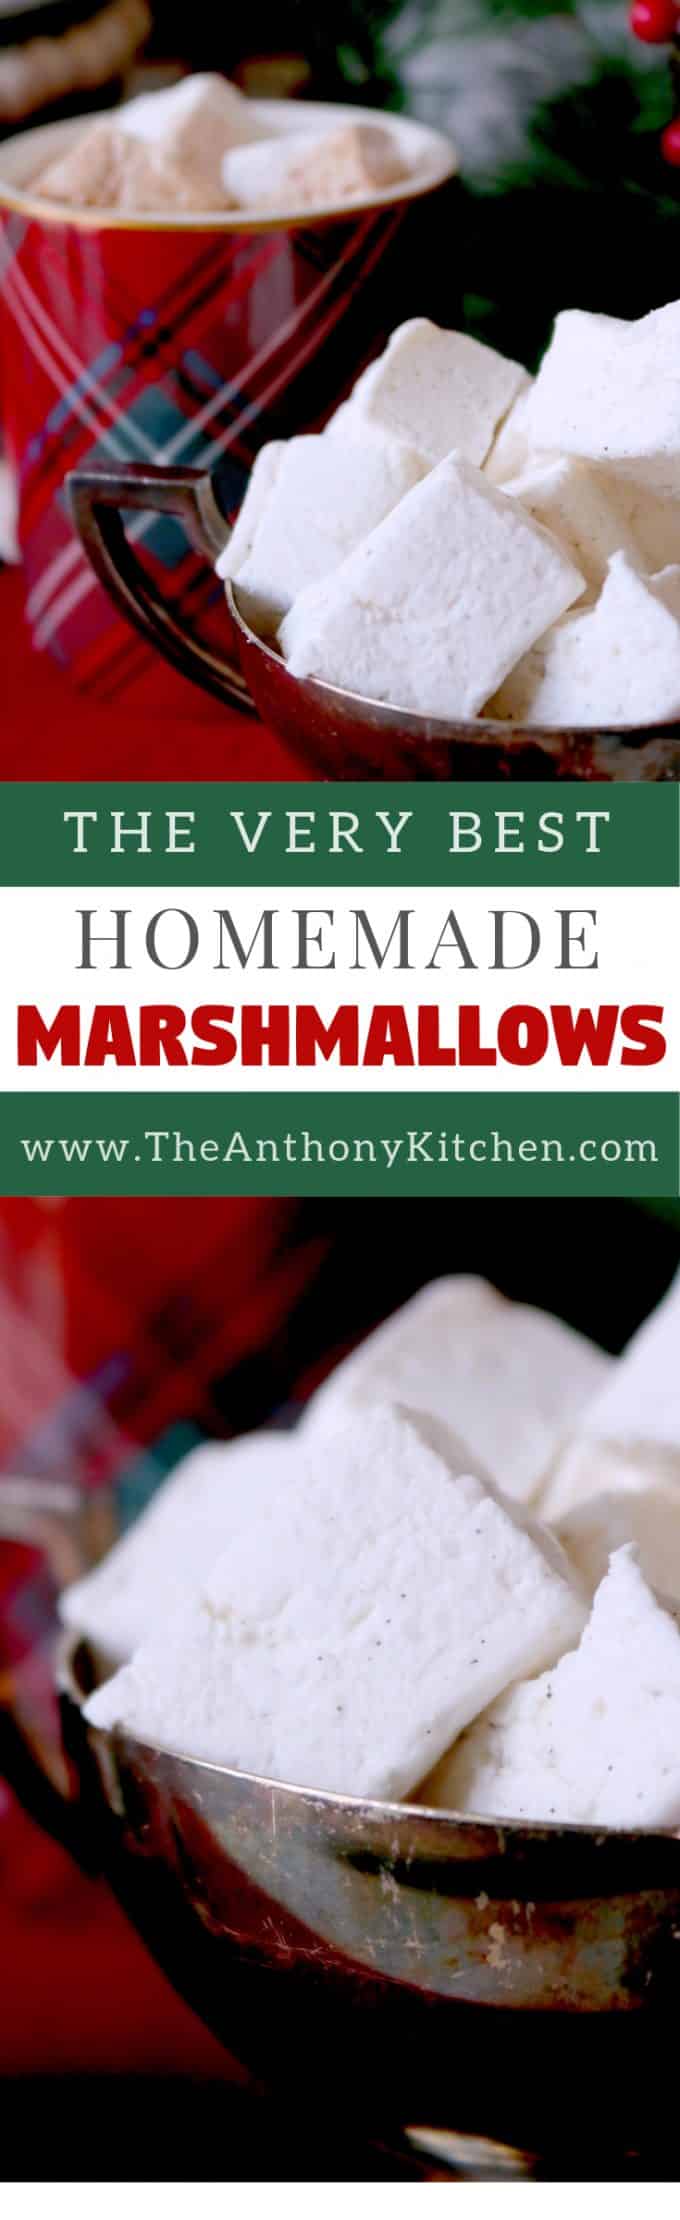 PInterest image of homemade marshmallows